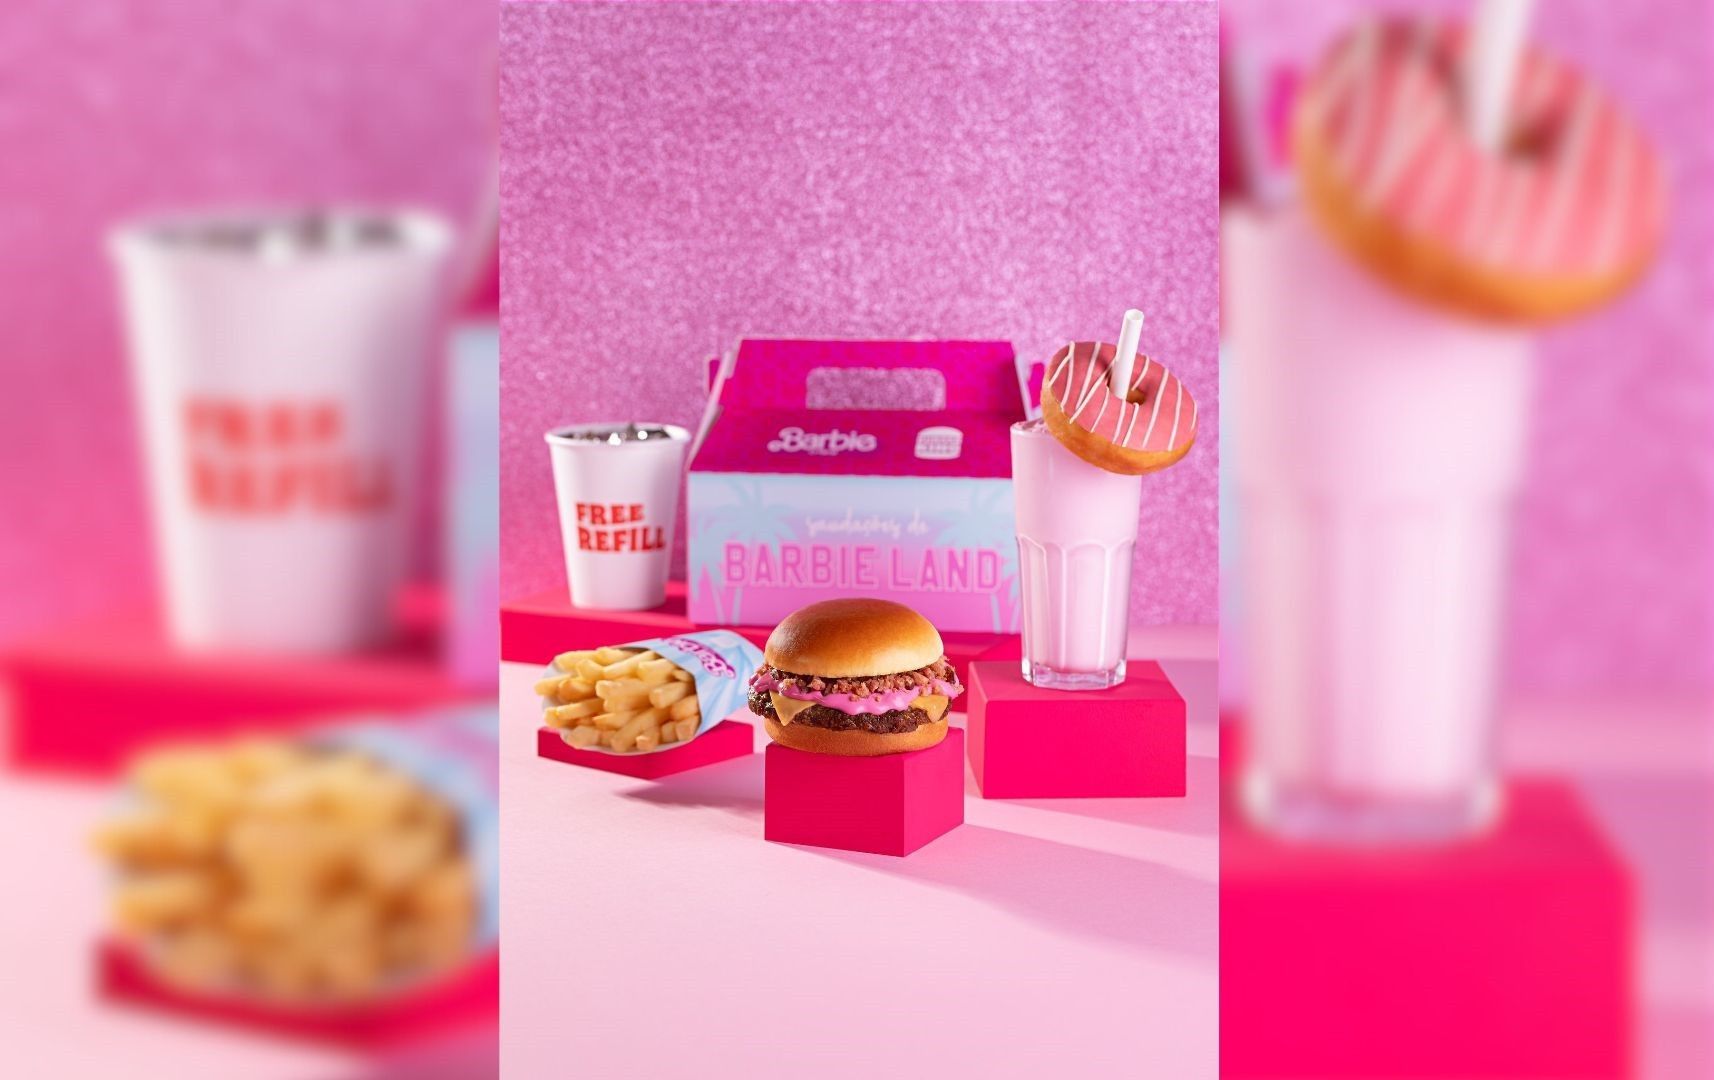 Burger King Brazil releases Barbiethemed cheeseburger meal